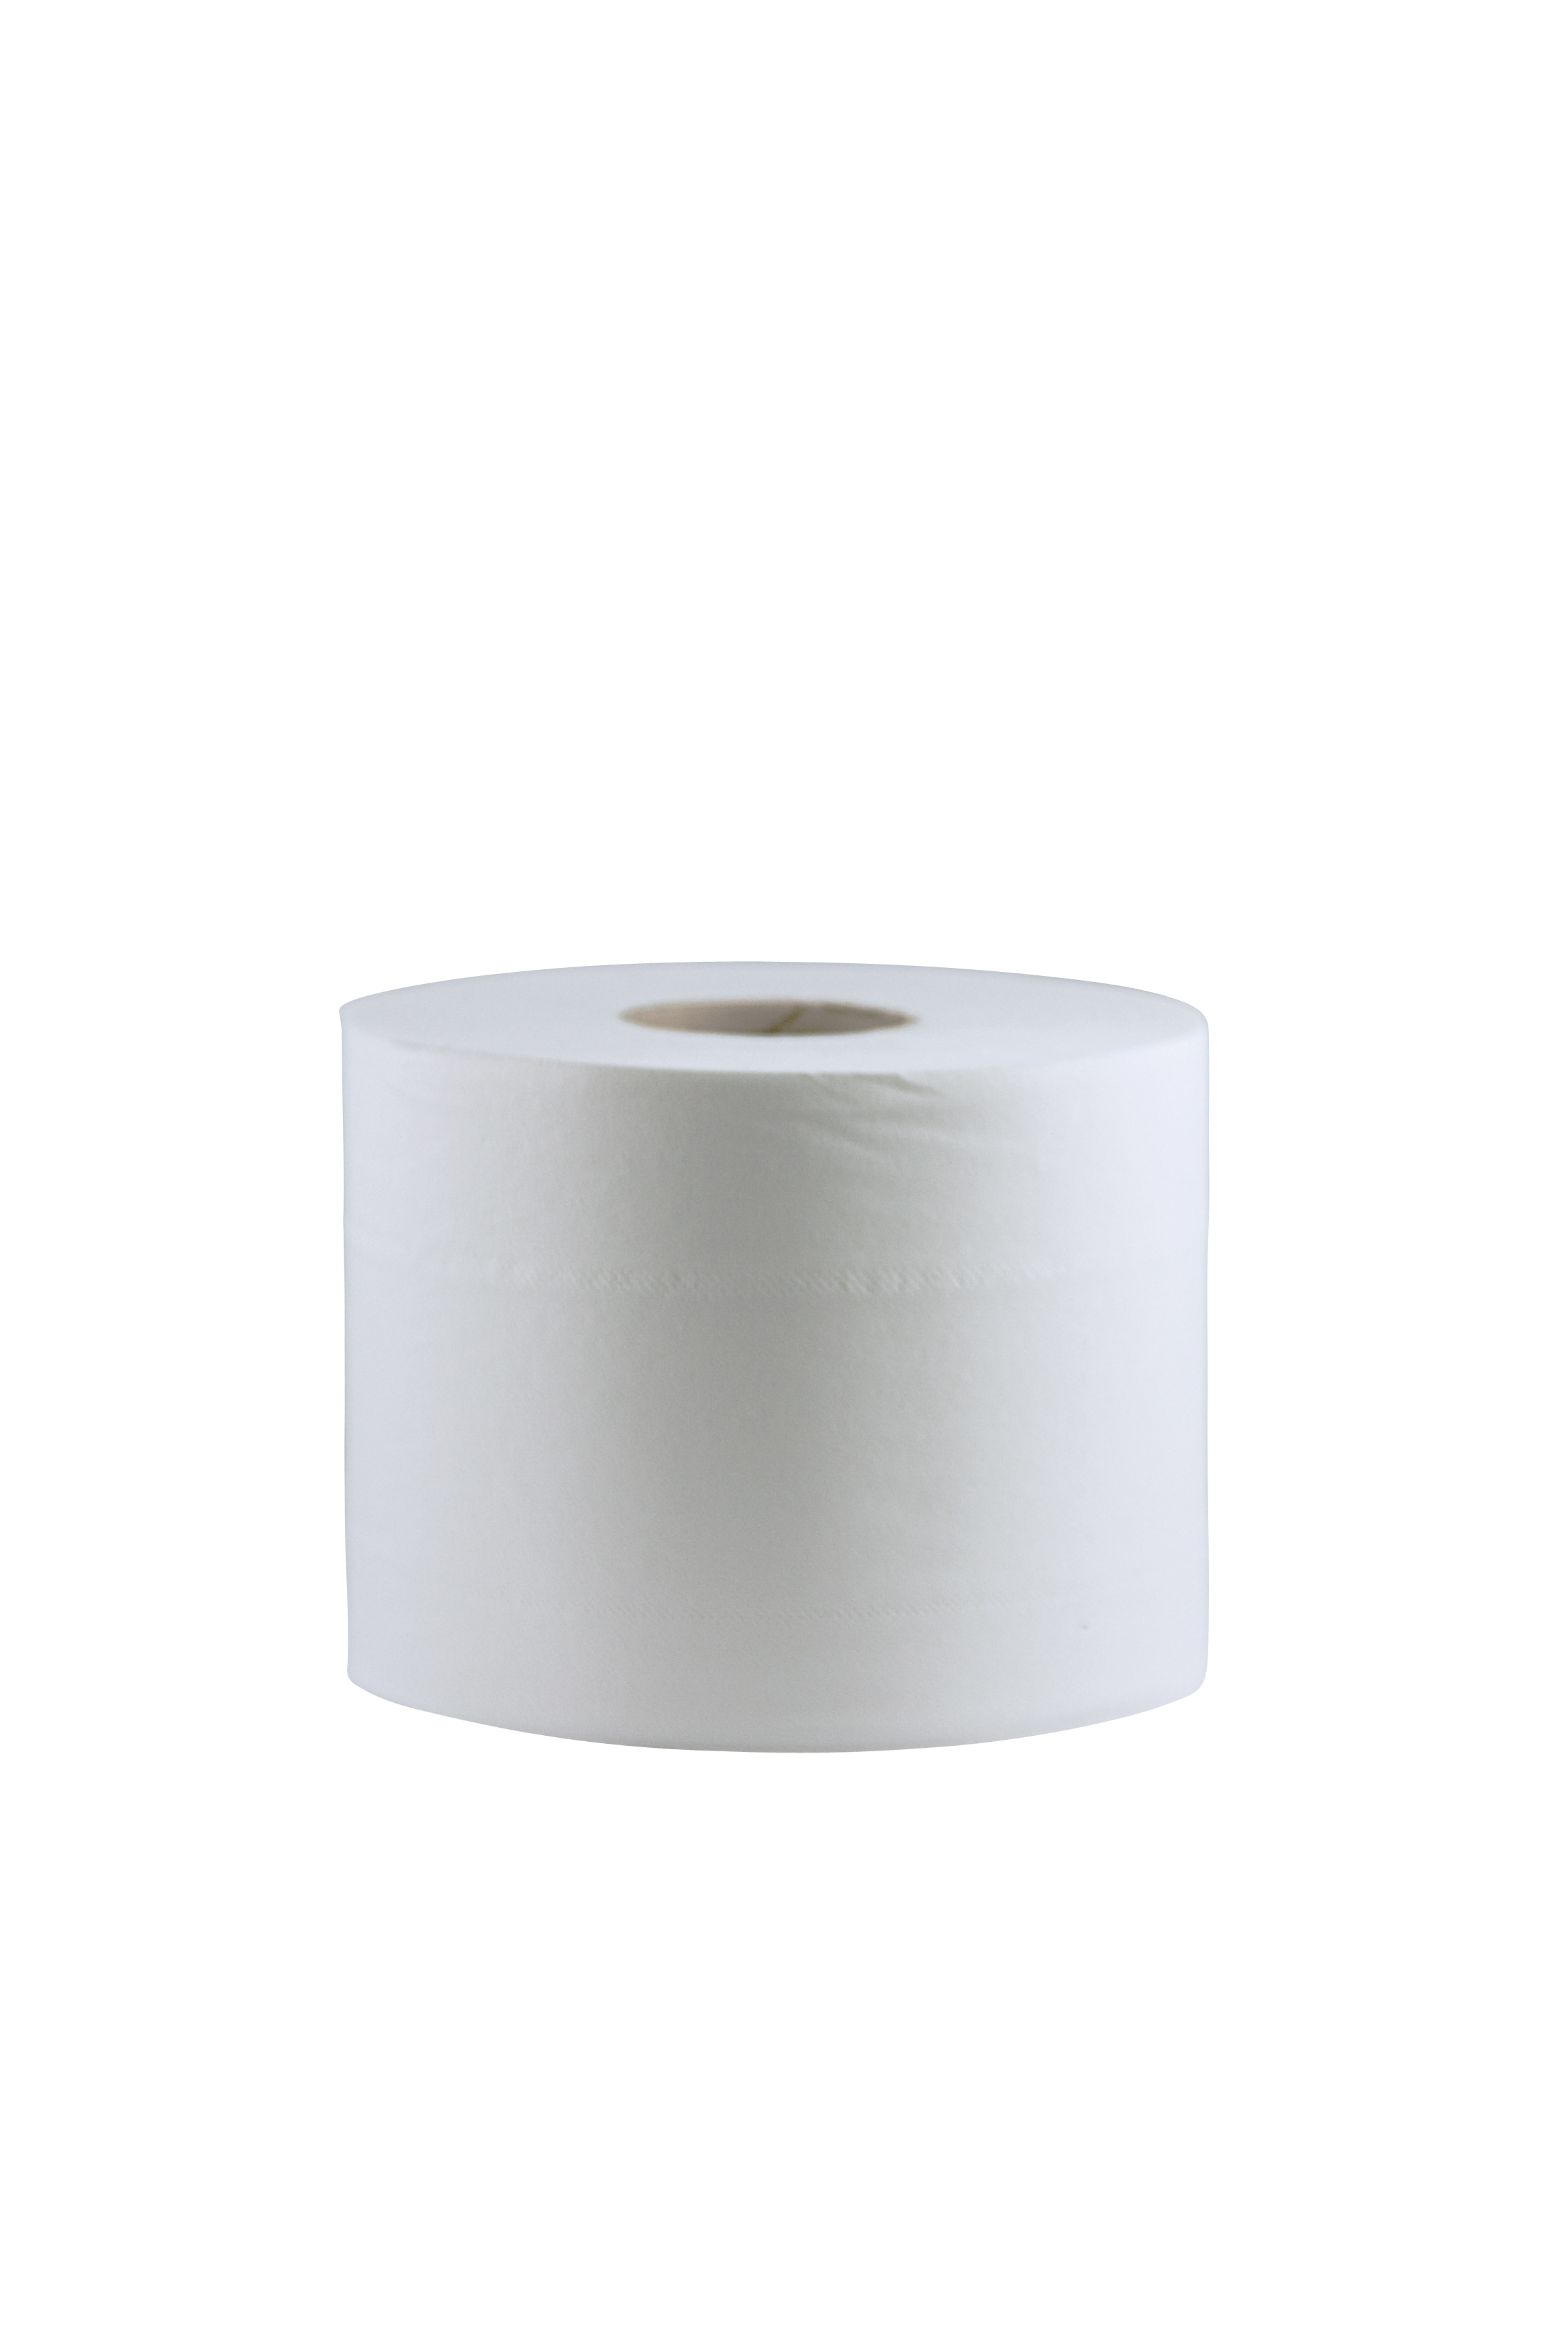 CWS Toilettenpapier  Maxi 80, 2-lagig 640 Blatt | VE= 12 Rollen